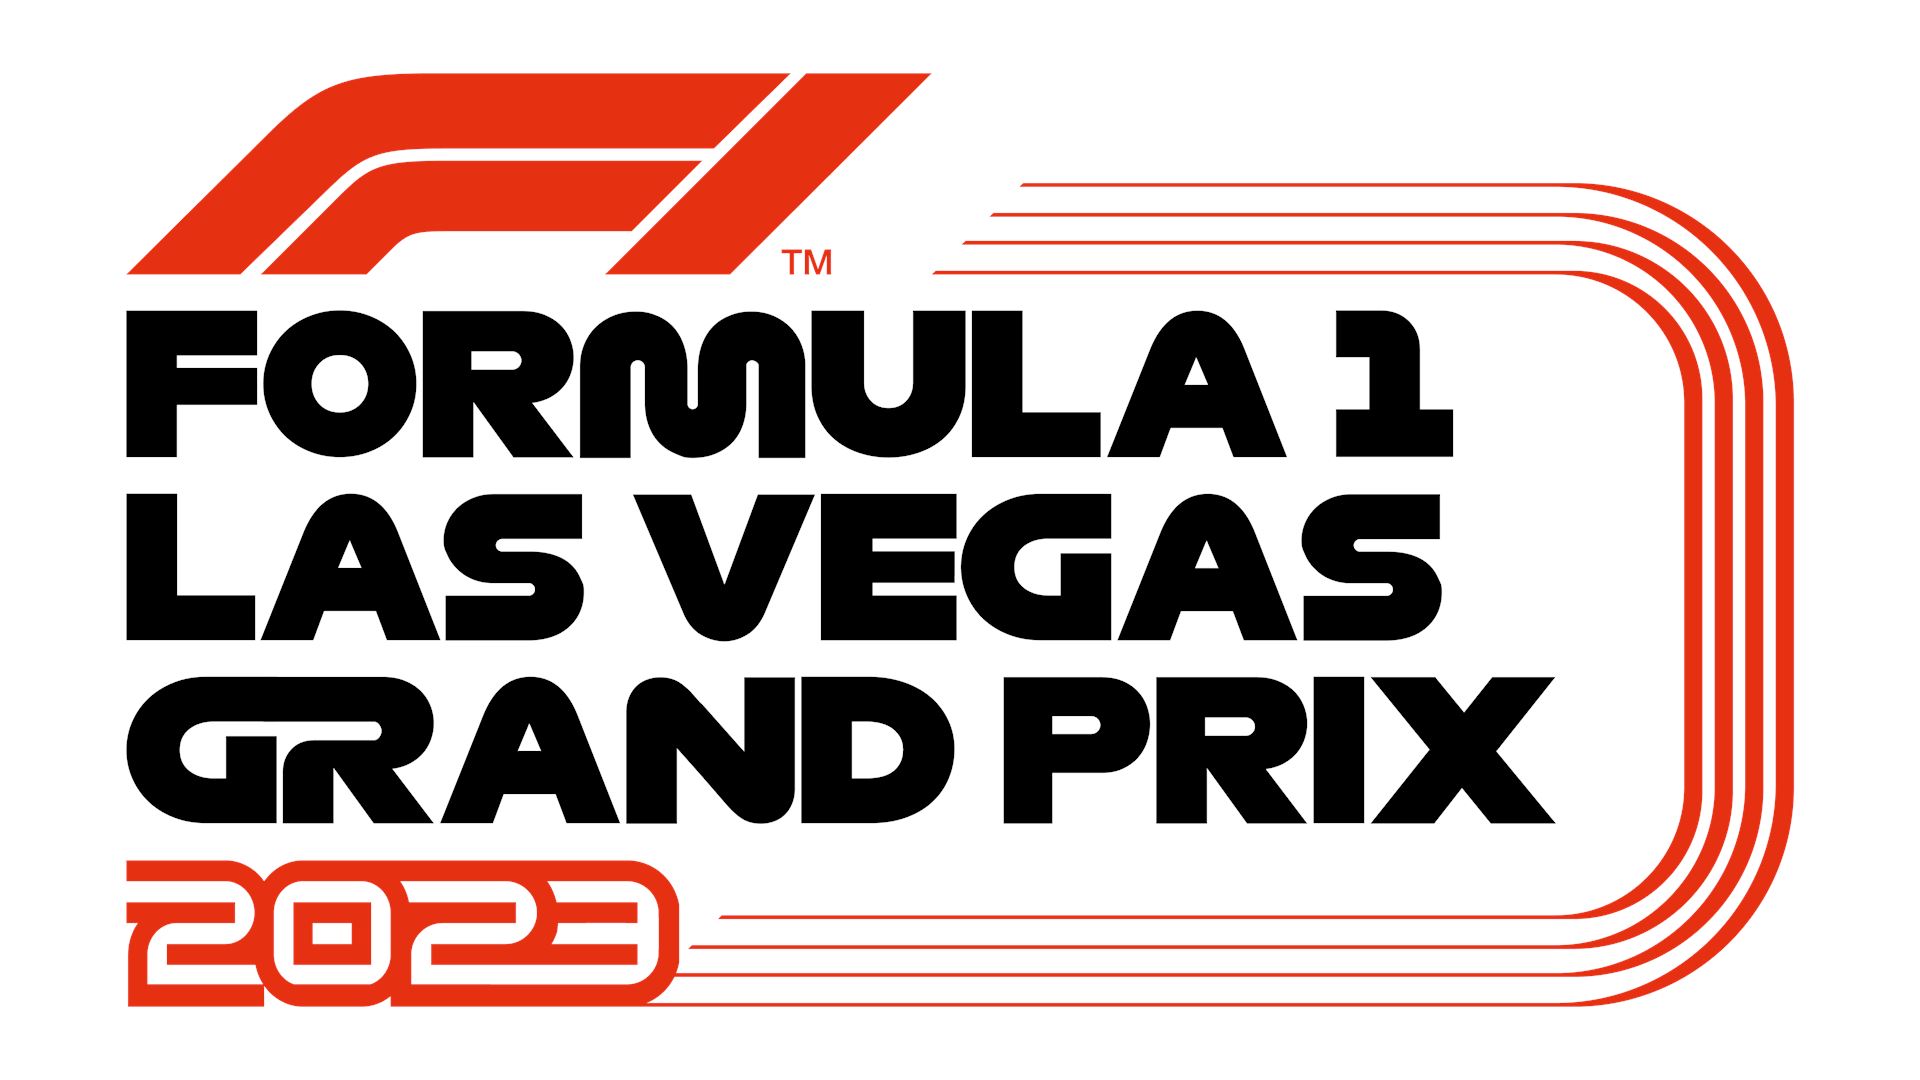 Formula 1 Las Vegas Grand Prix 2023: Everything you need to know